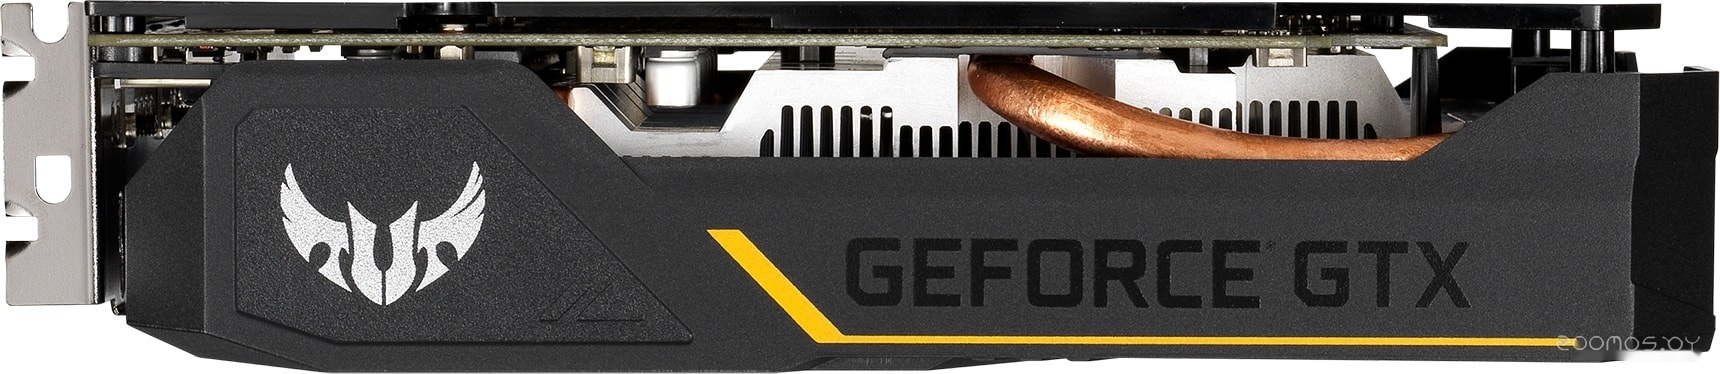  Asus TUF GeForce GTX 1650 Gaming OC 4GB GDDR6     